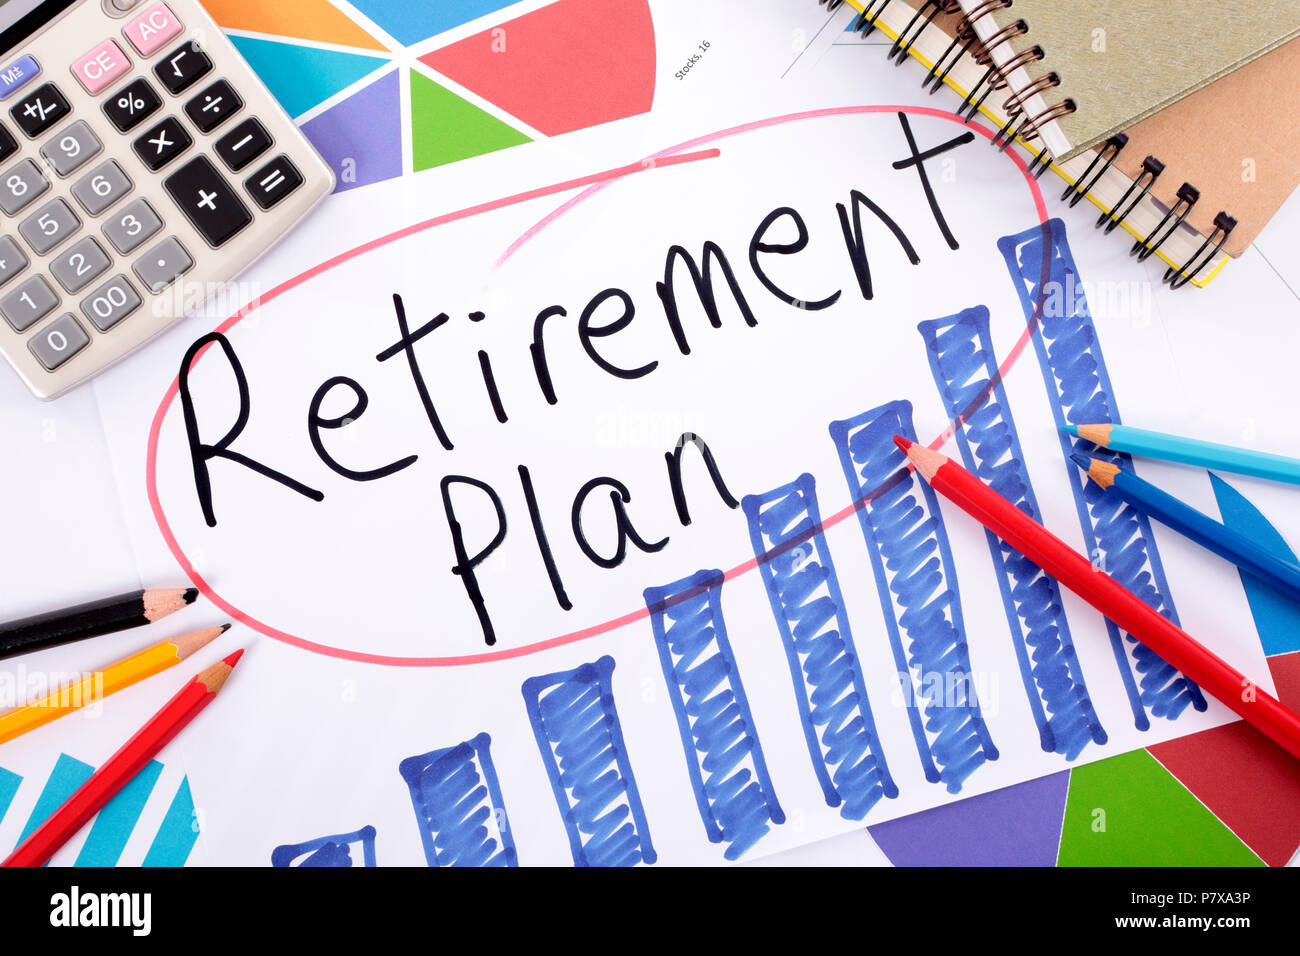 Retirement Plan Chart